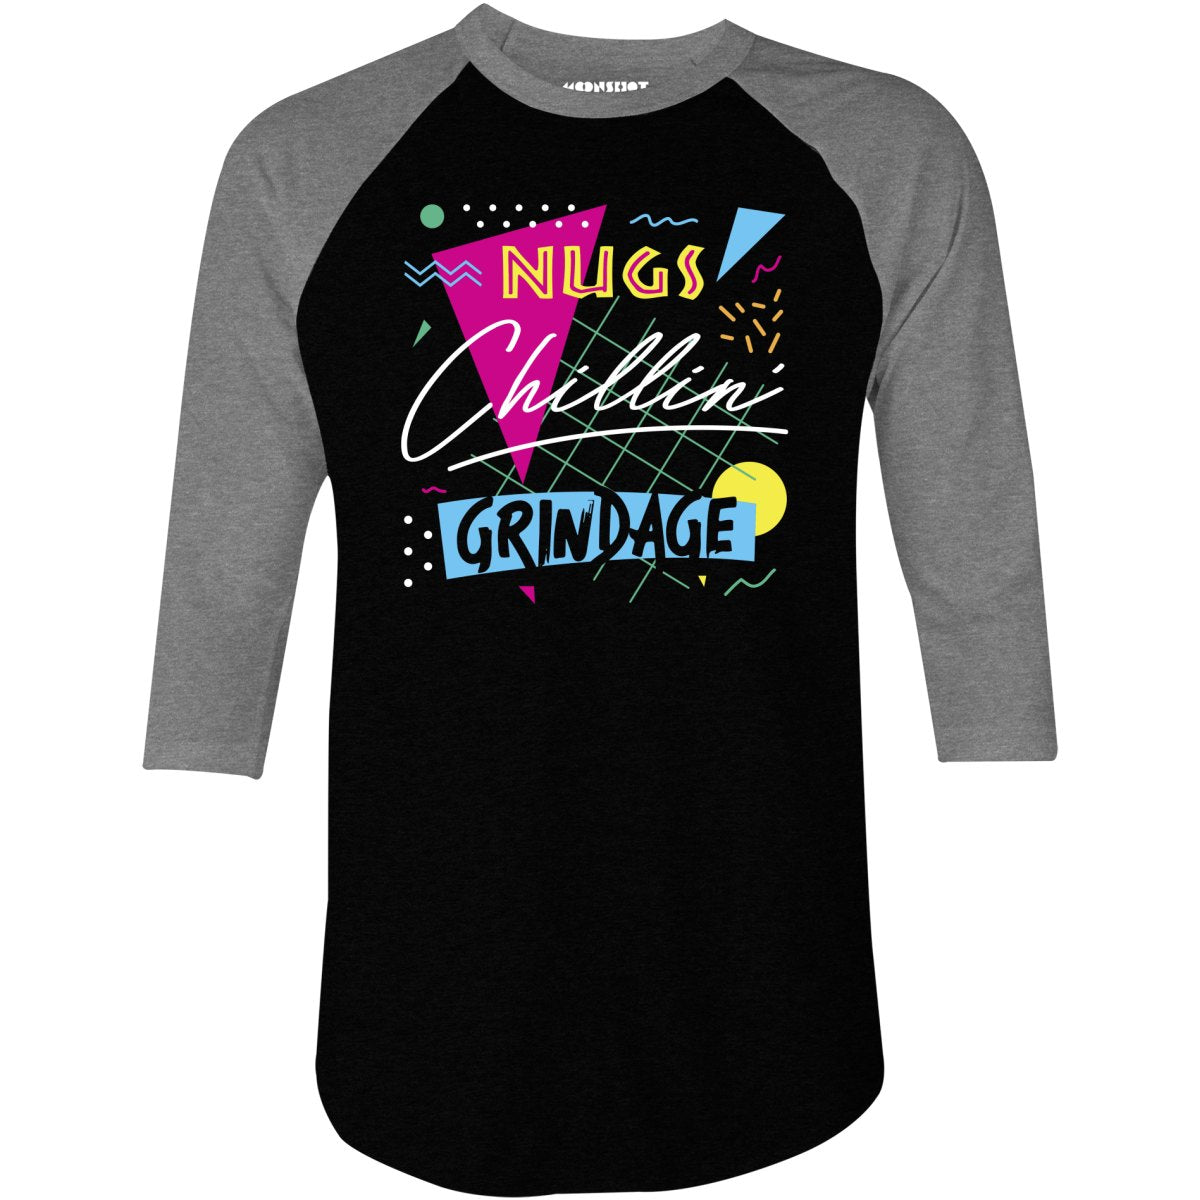 Nugs, Chillin', and Grindage - 3/4 Sleeve Raglan T-Shirt